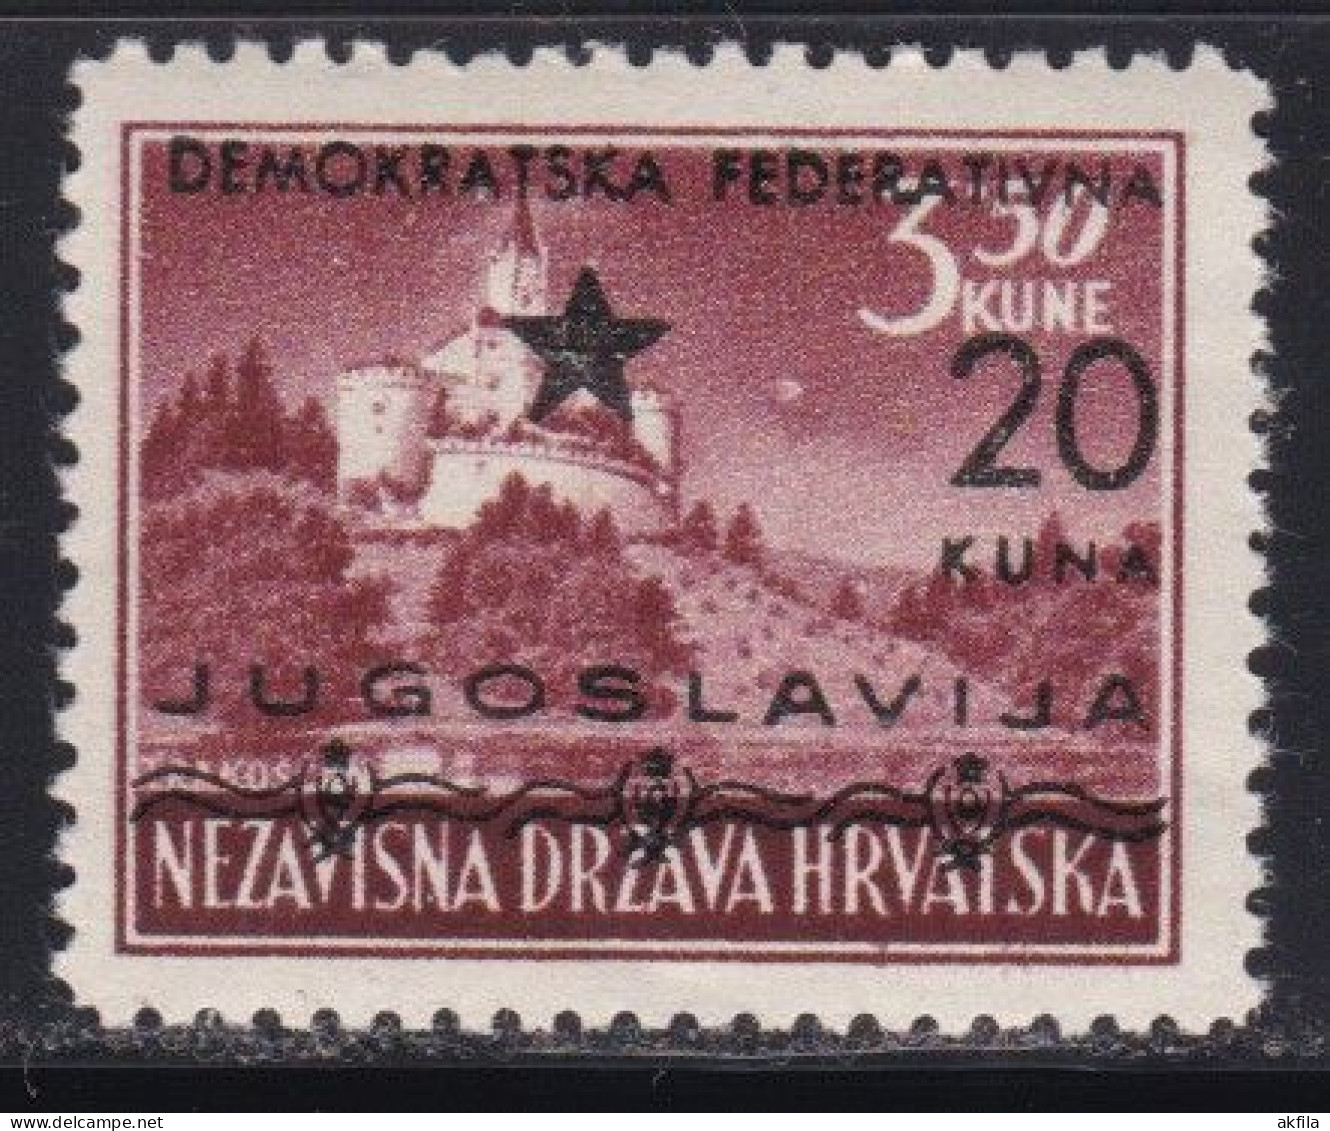 Yugoslavia 1945 Croatia Split, Auxiliary Edition, Value Of HRK 20/3.50, Pair Offset, MNH - Neufs